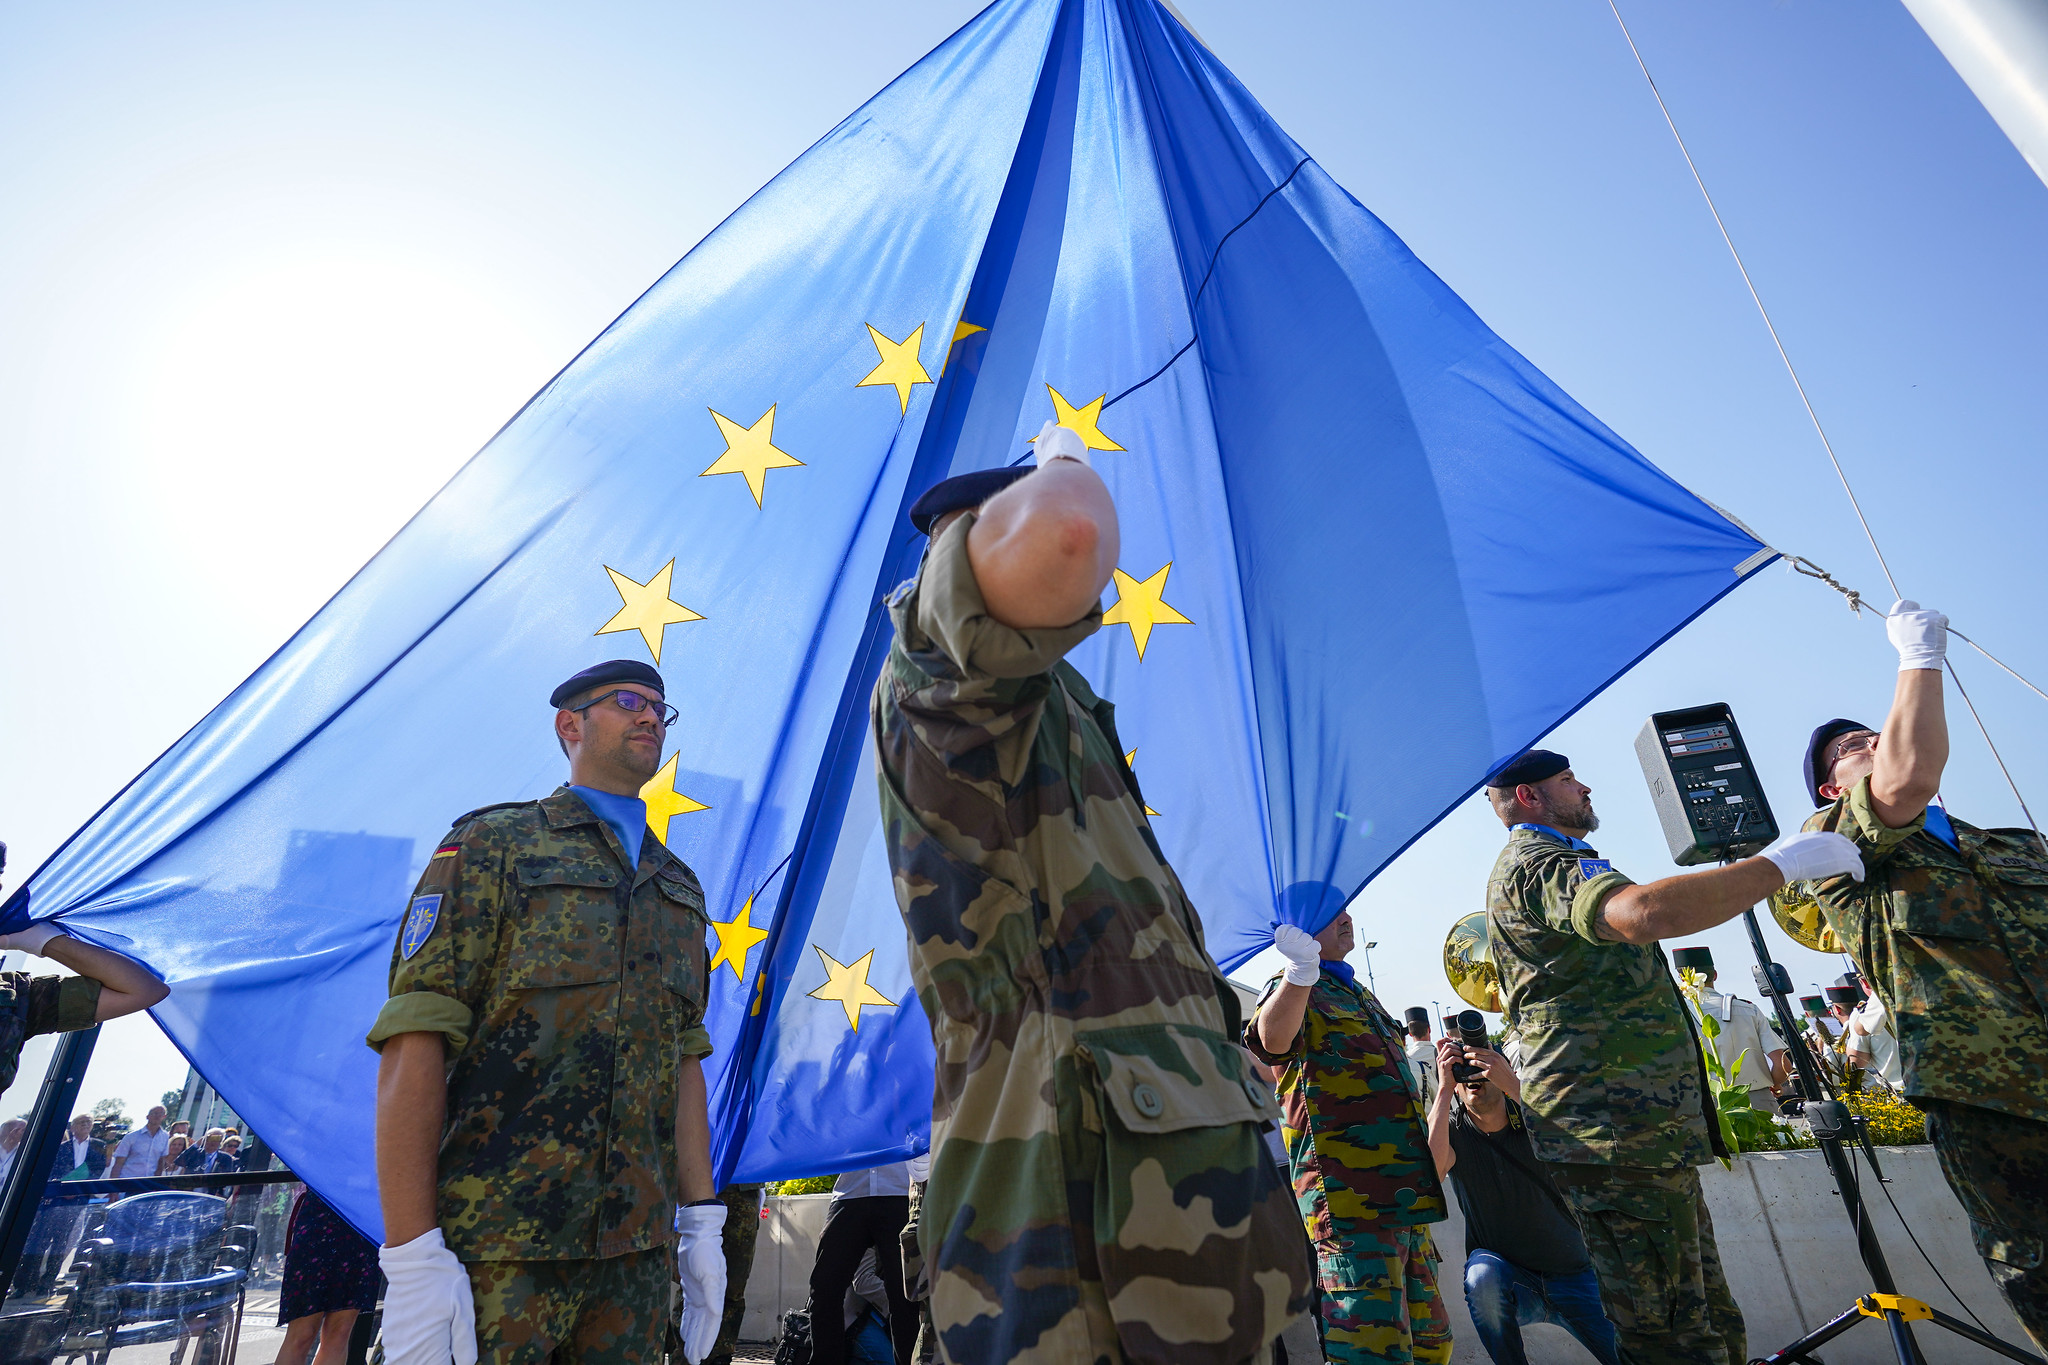 The EU at a crossroads: choosing peace or militarizing?